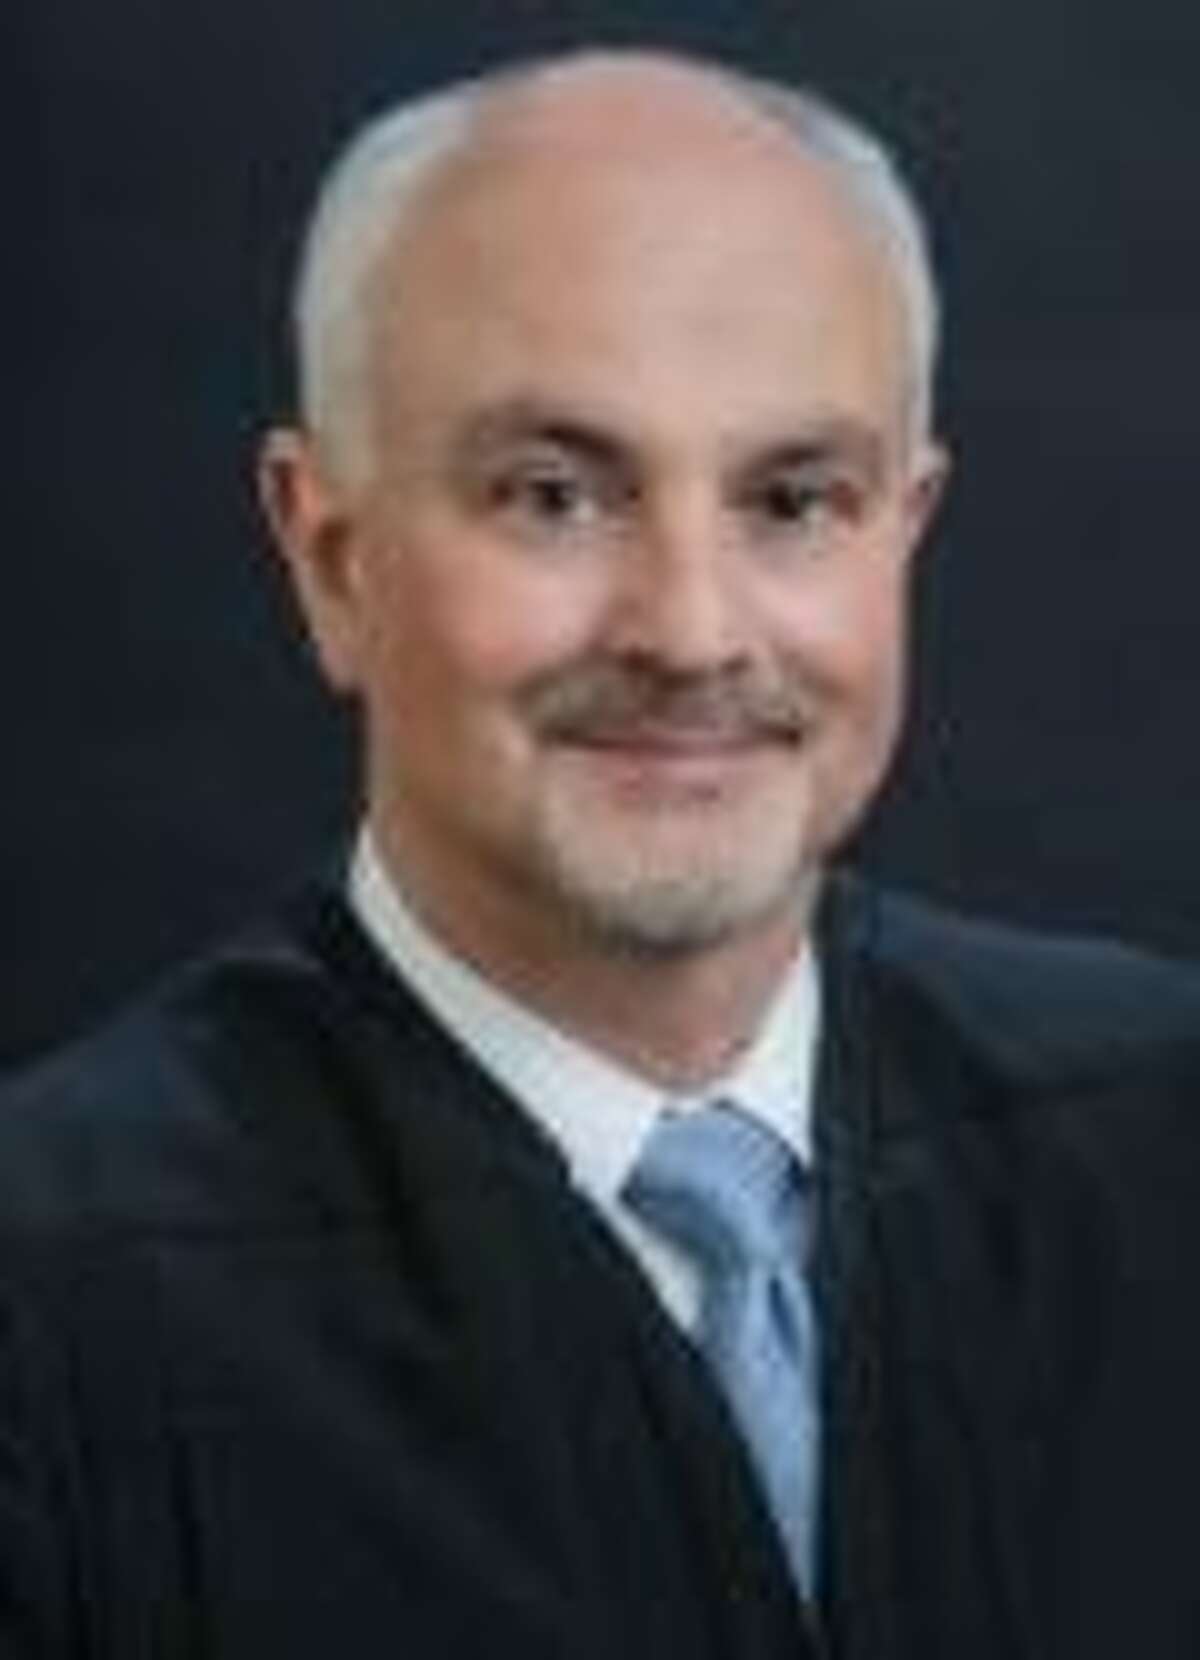 U.S. District Judge James Donato